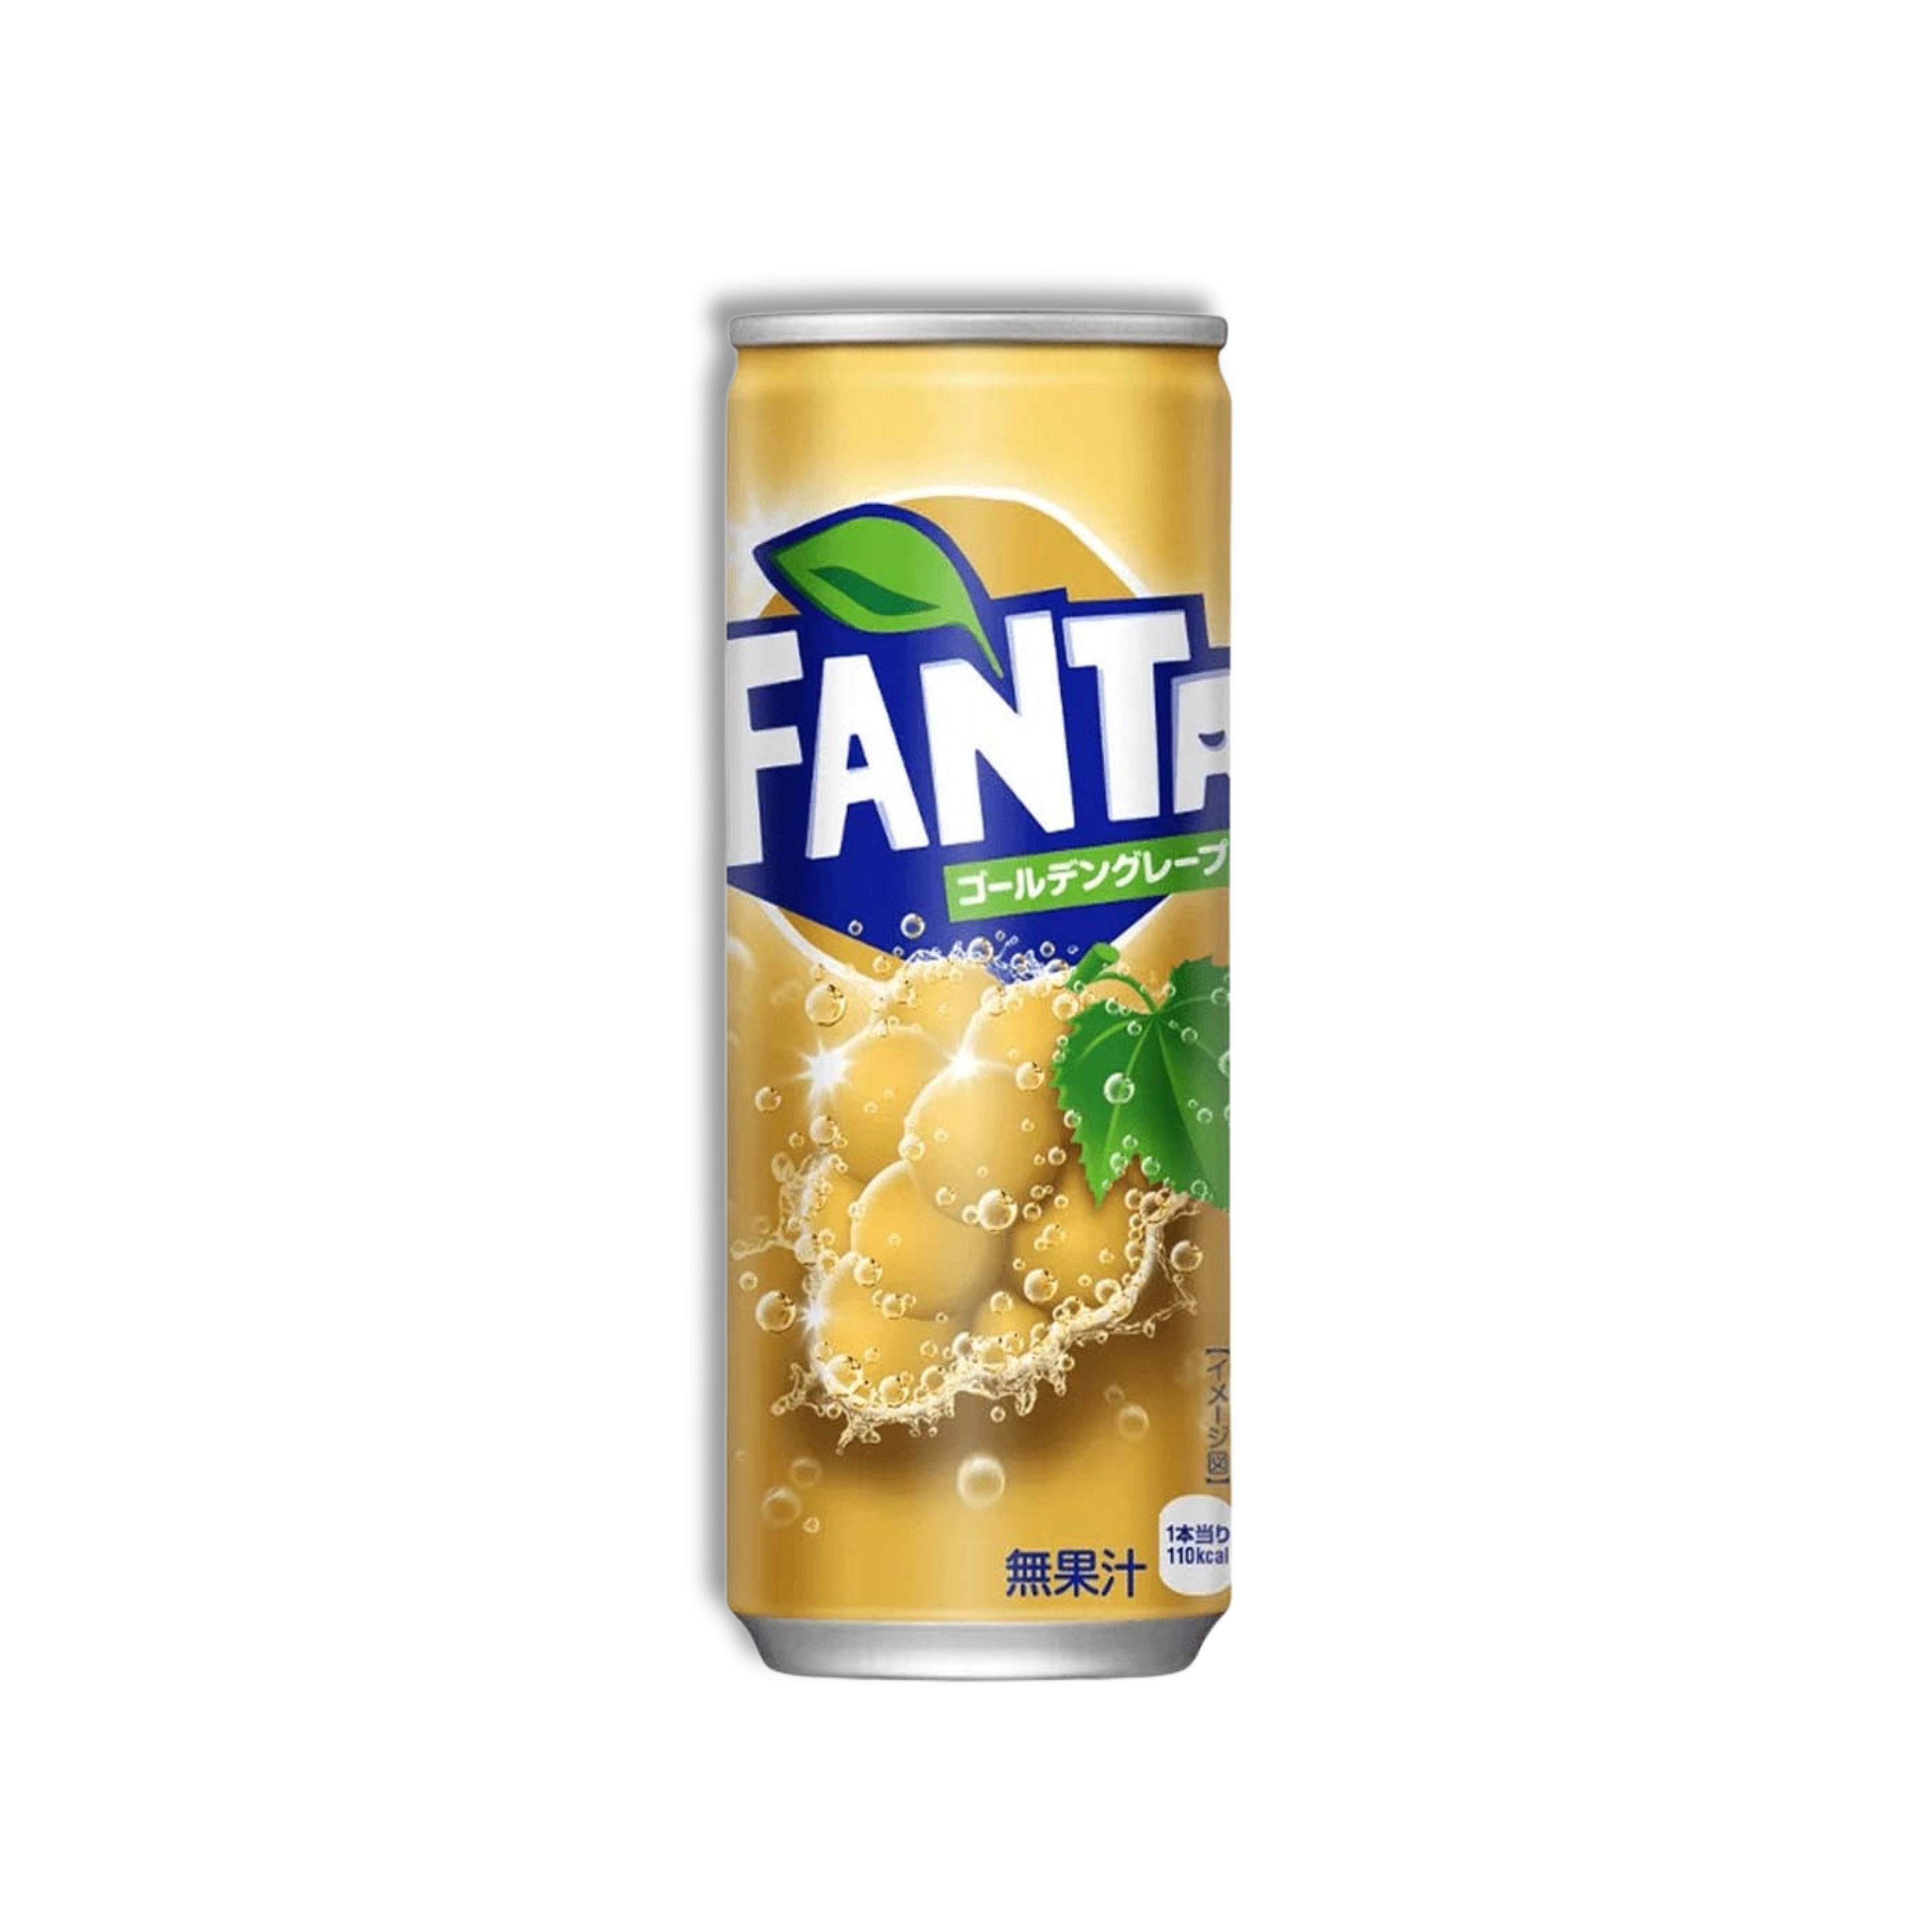 Fanta - Golden Grape